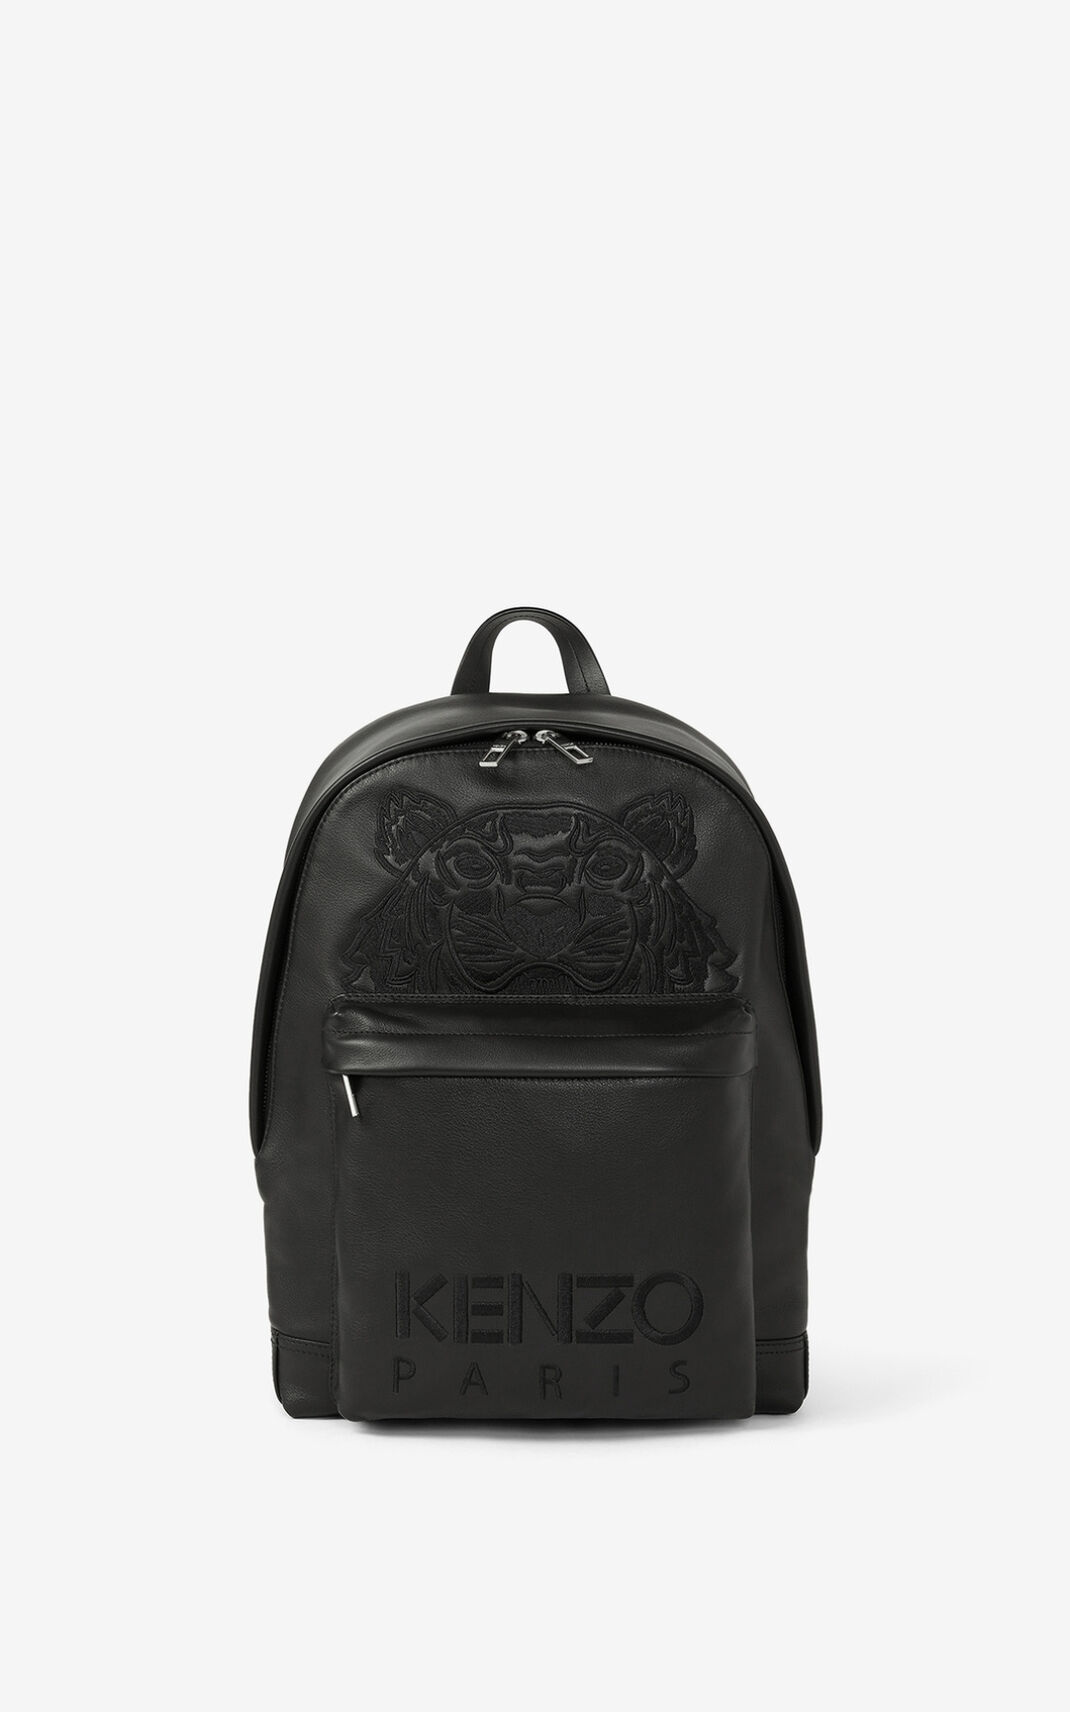 Kenzo 虎 レザー リュック メンズ 黒 - VYNPRG602